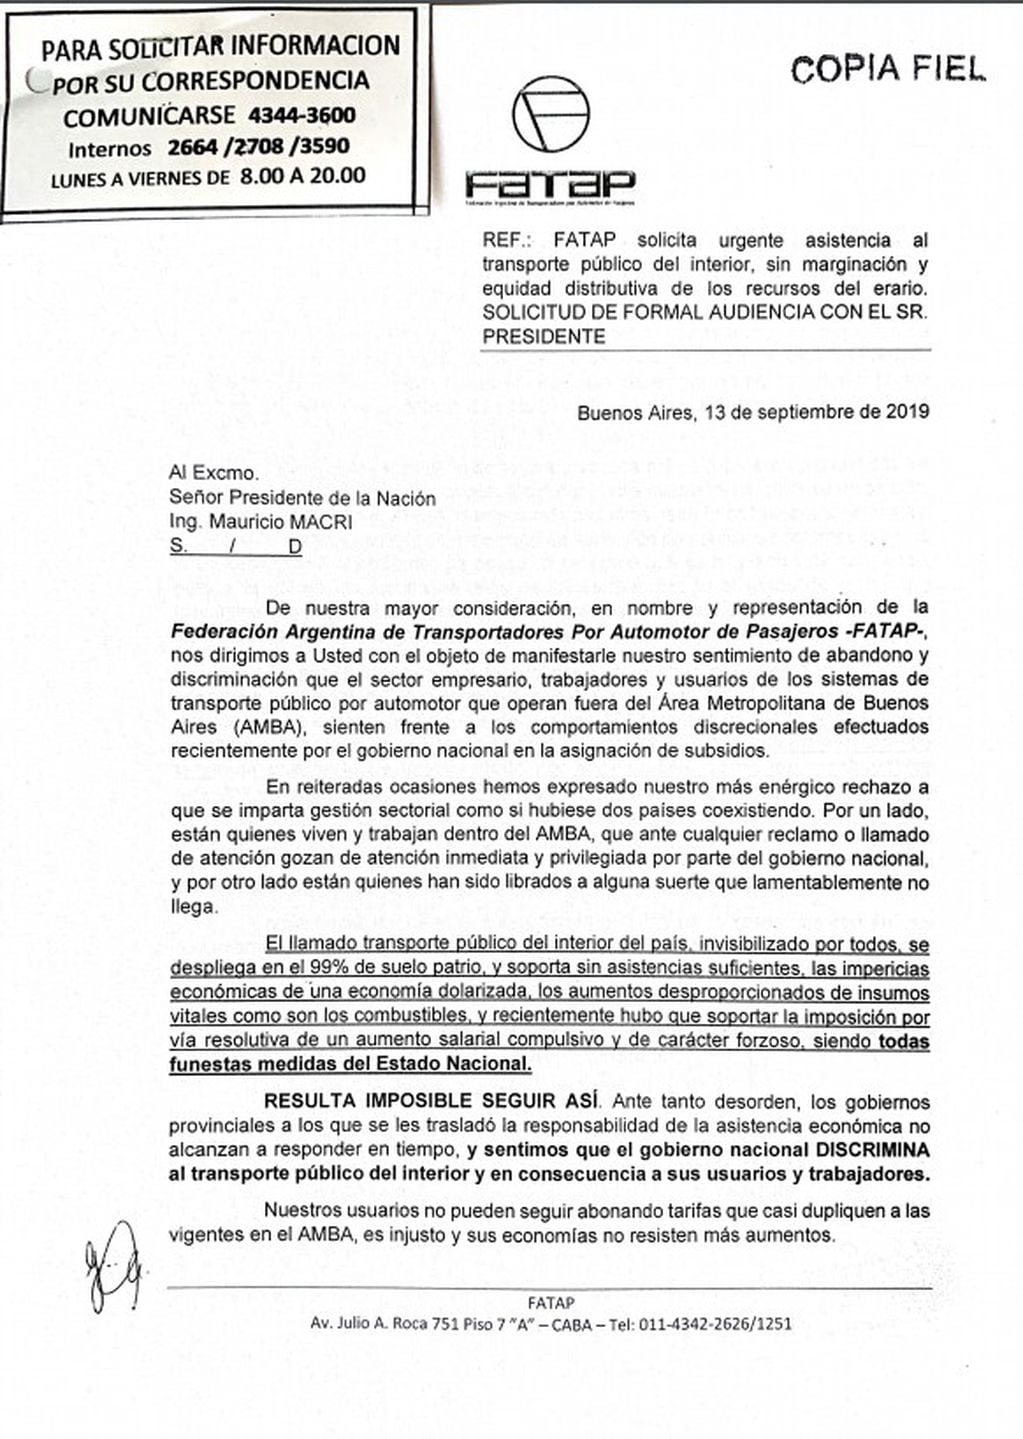 Carta enviada al presidente Mauricio Macri desde FATAP.